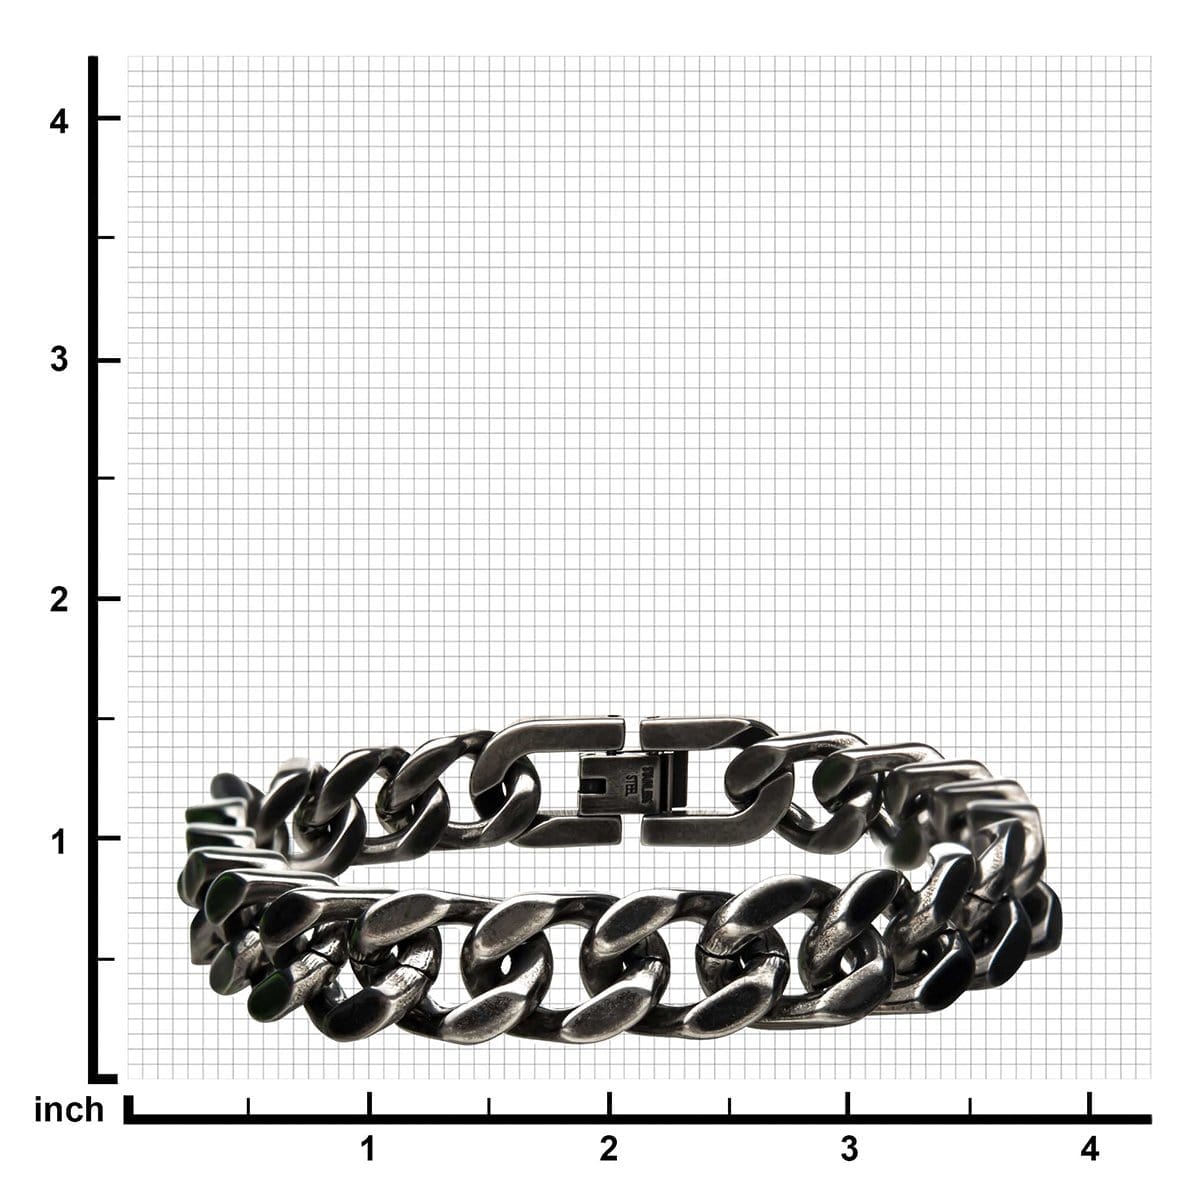 INOX JEWELRY Bracelets Silver Tone Stainless Steel Oxidized Finish 11mm Diamond Cut Link Chain Bracelet BRAT02511-85